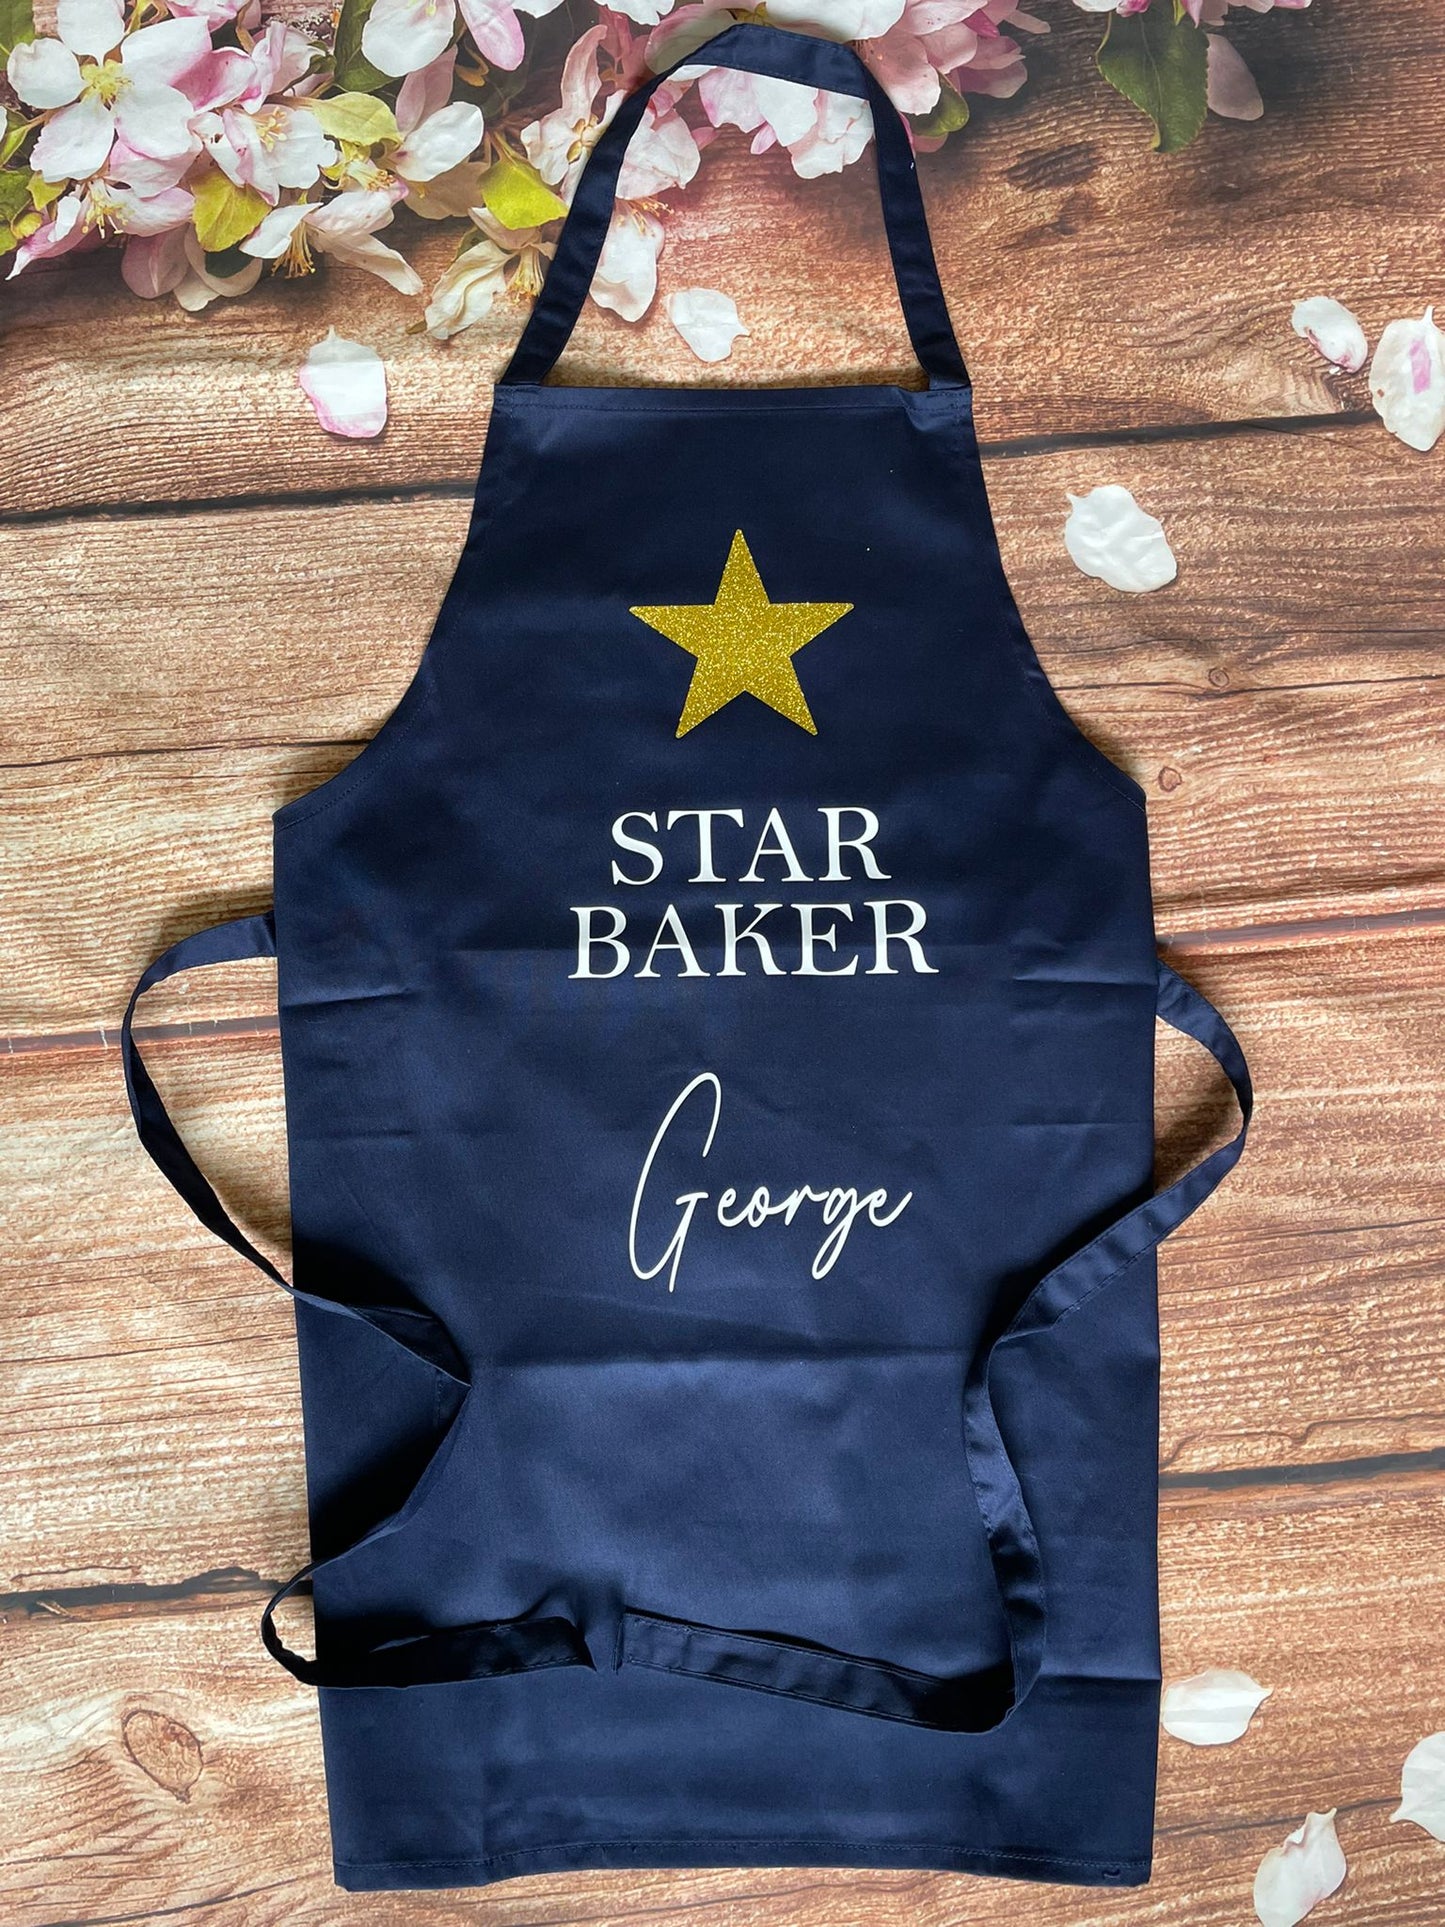 Star baker personalised apron